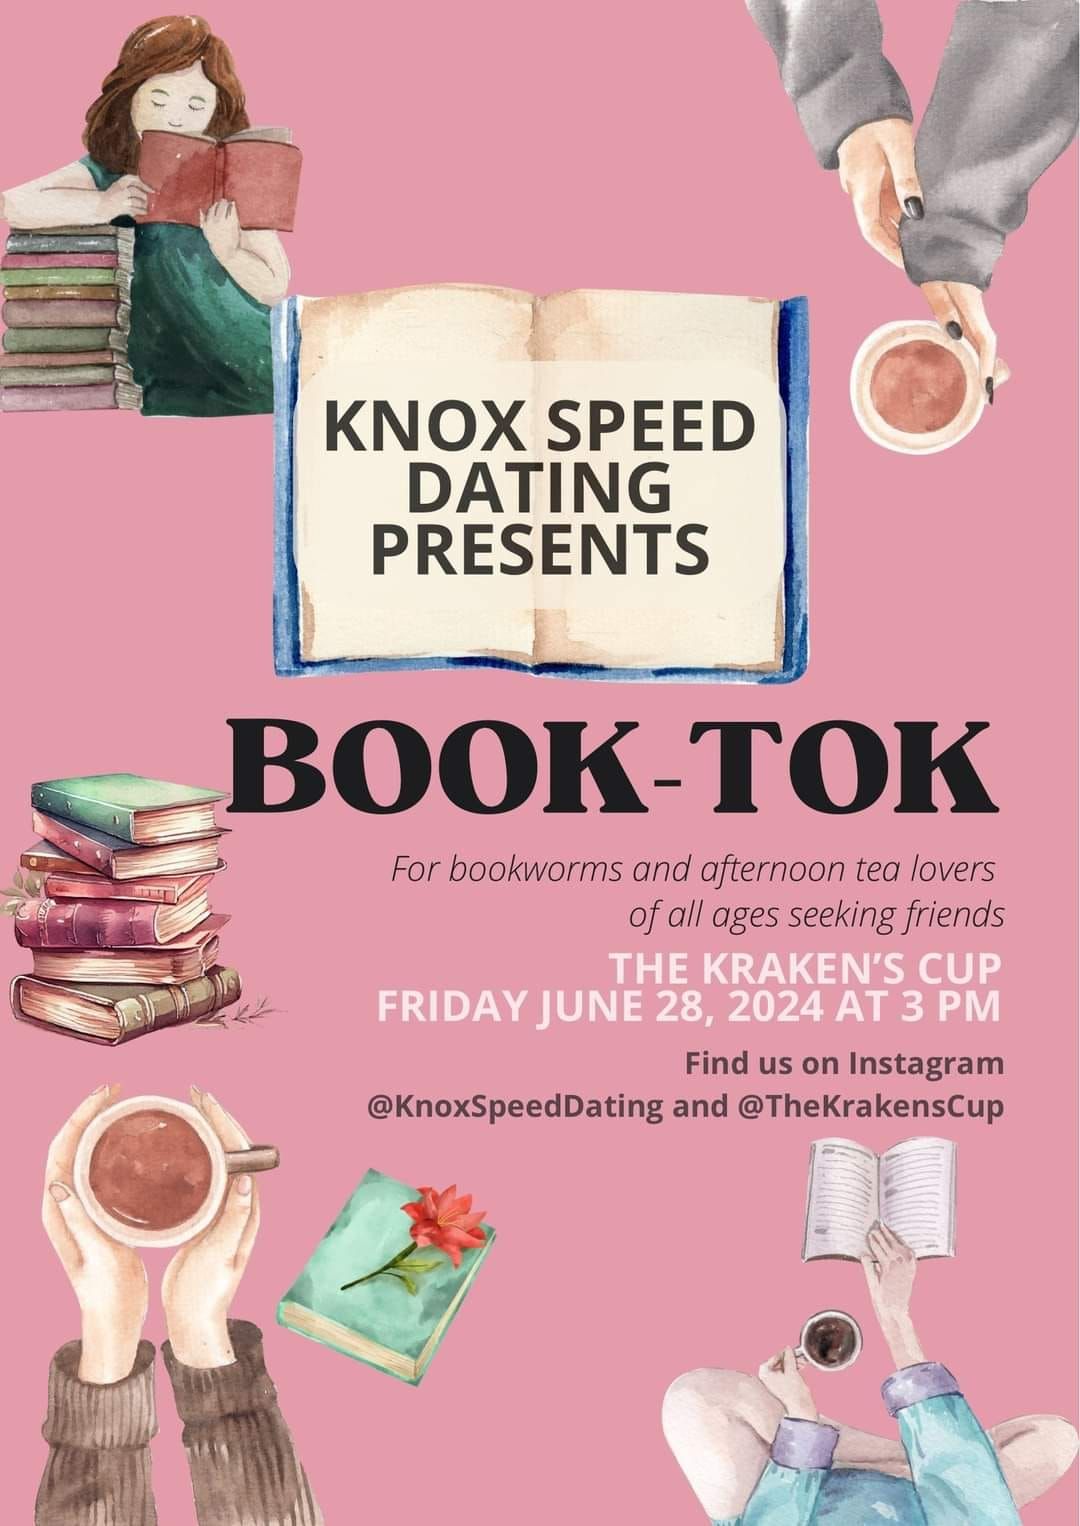 Book-tok - Speed Friending Event